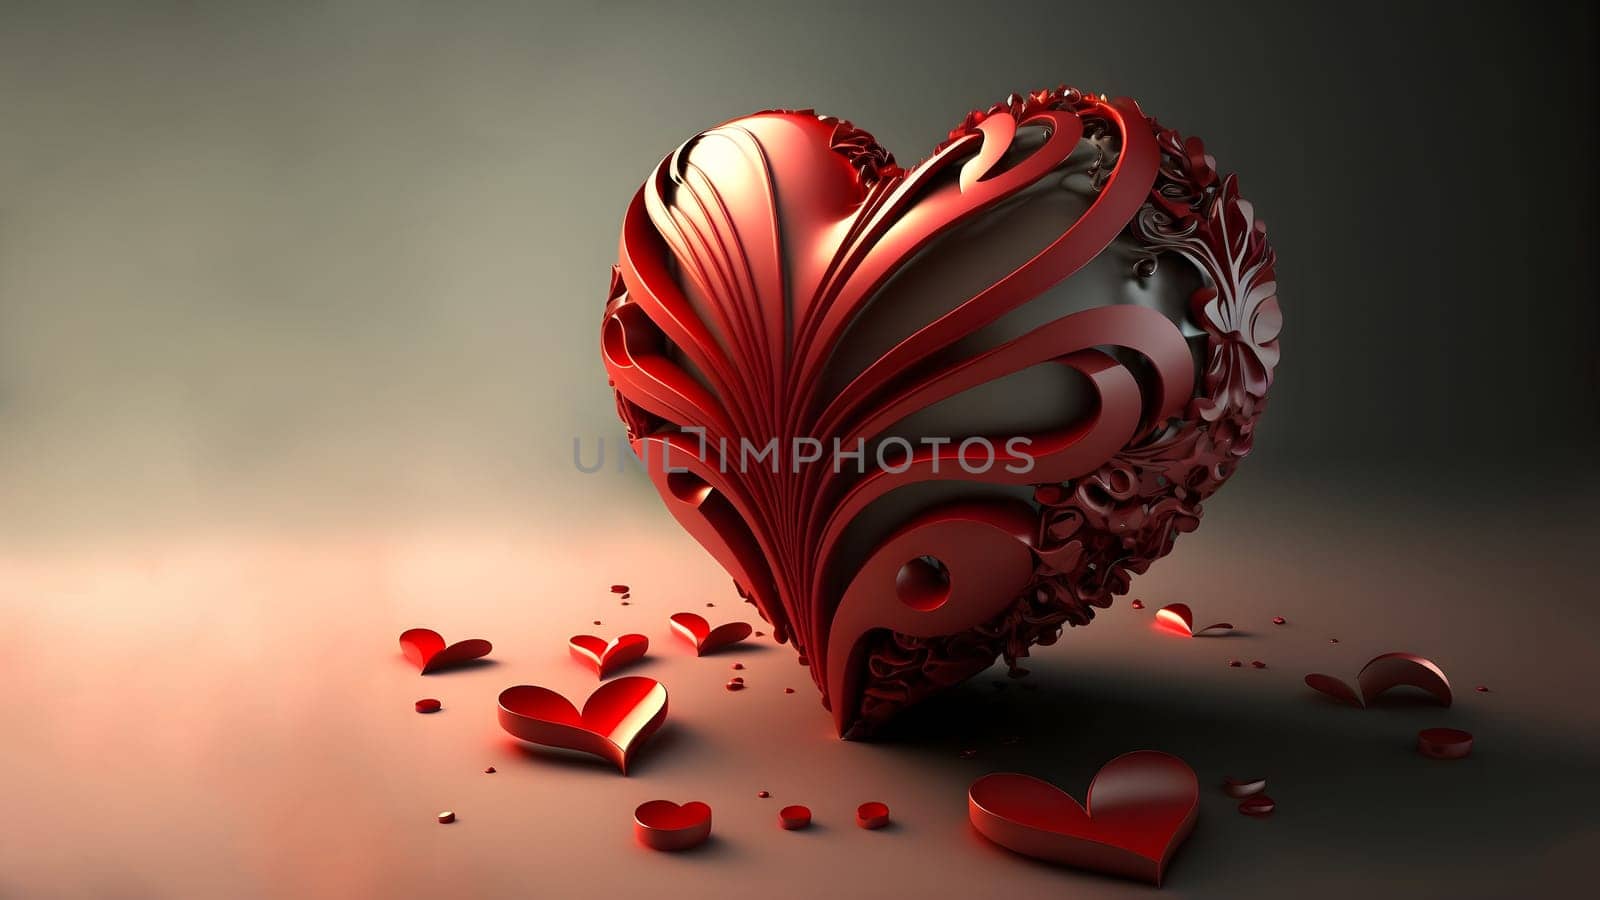 dark valentines day ornate fantasy heart symbol, neural network generated art by z1b